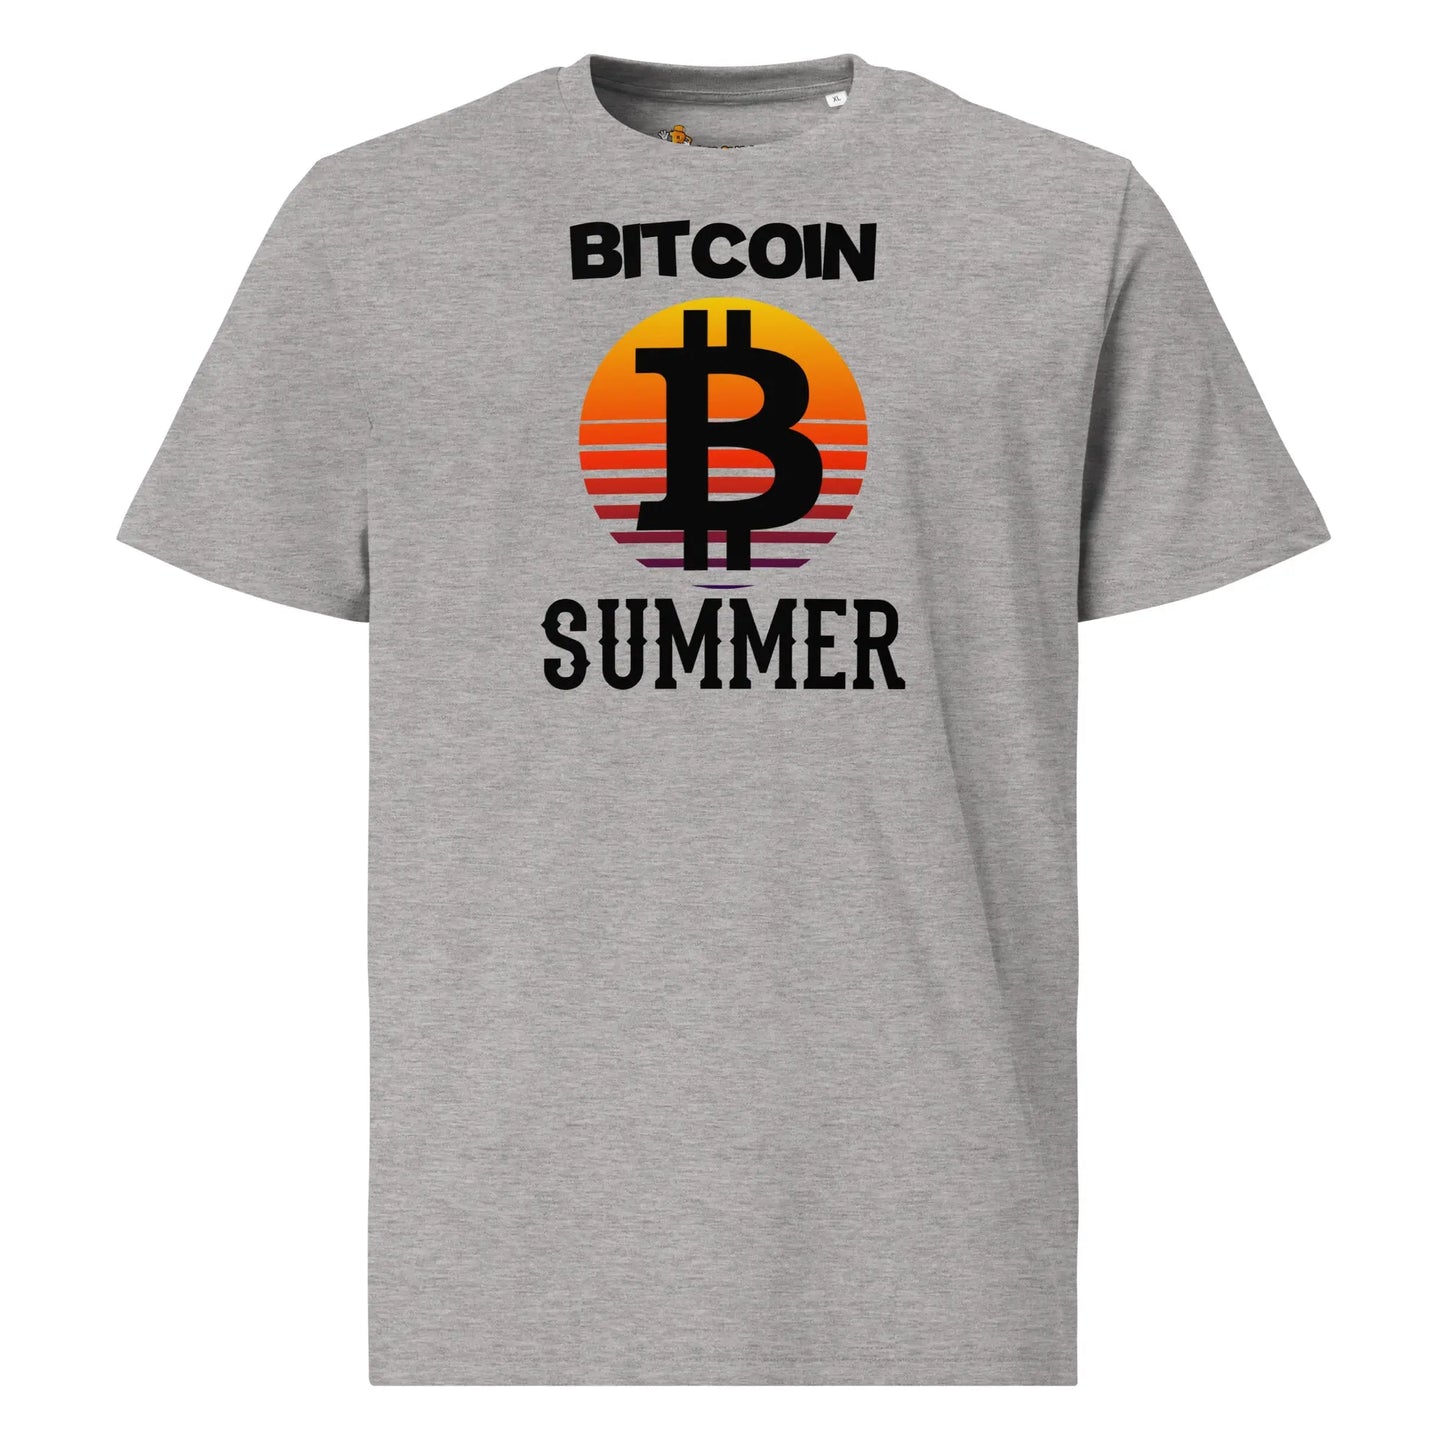 Bitcoin Summer - Premium Unisex Organic Cotton Bitcoin T-shirt Grey Color